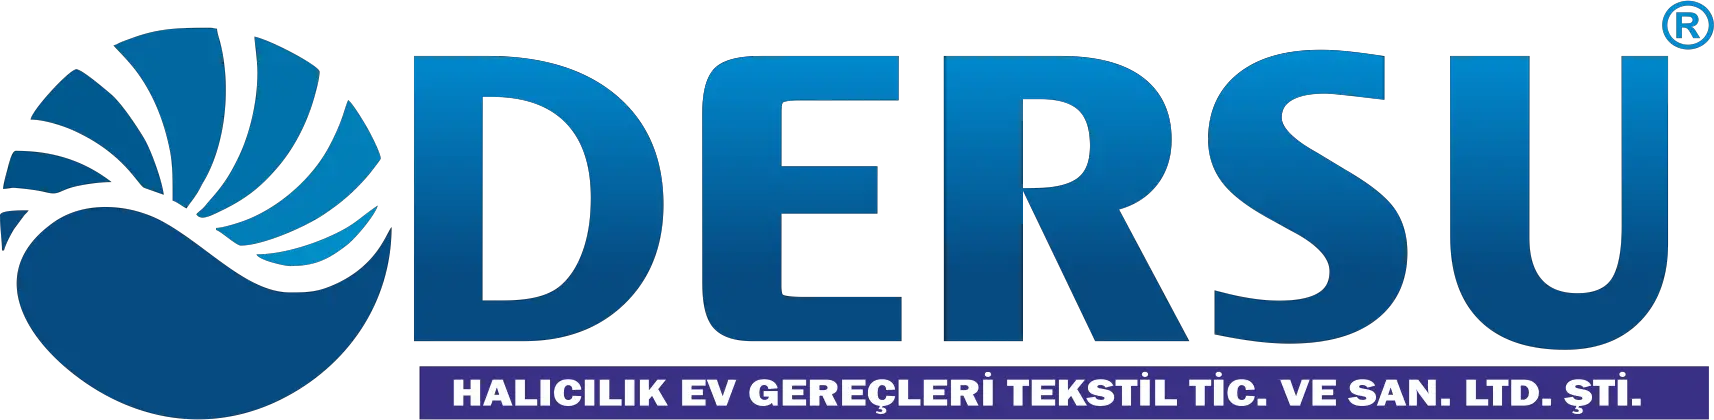 Top 60 tæppeproducenter i Tyrkiet 9